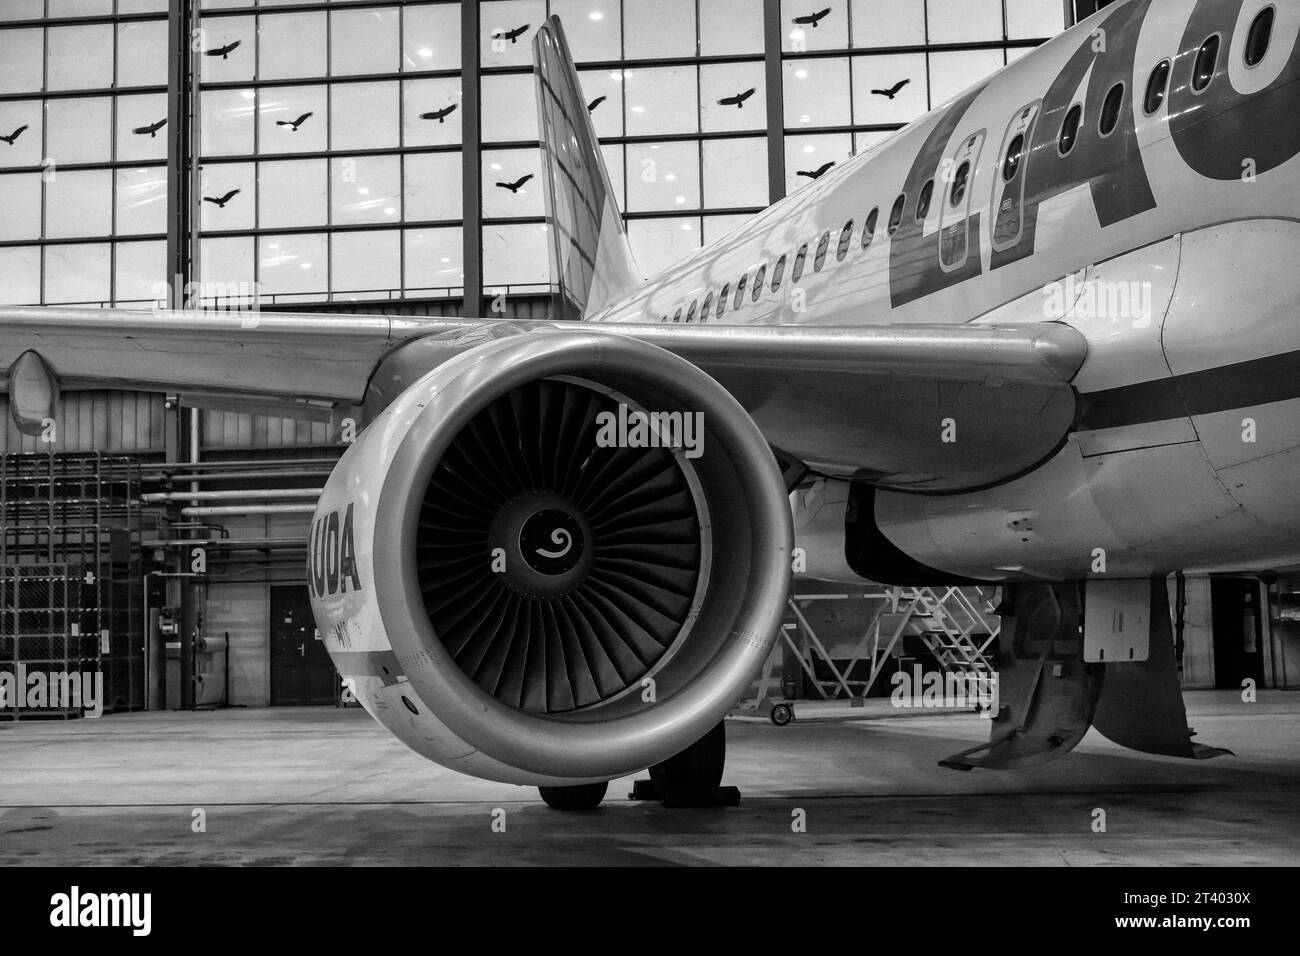 Aircraft maintenance in the hangar. Airplane engine. Black and white photo. Stock Photo